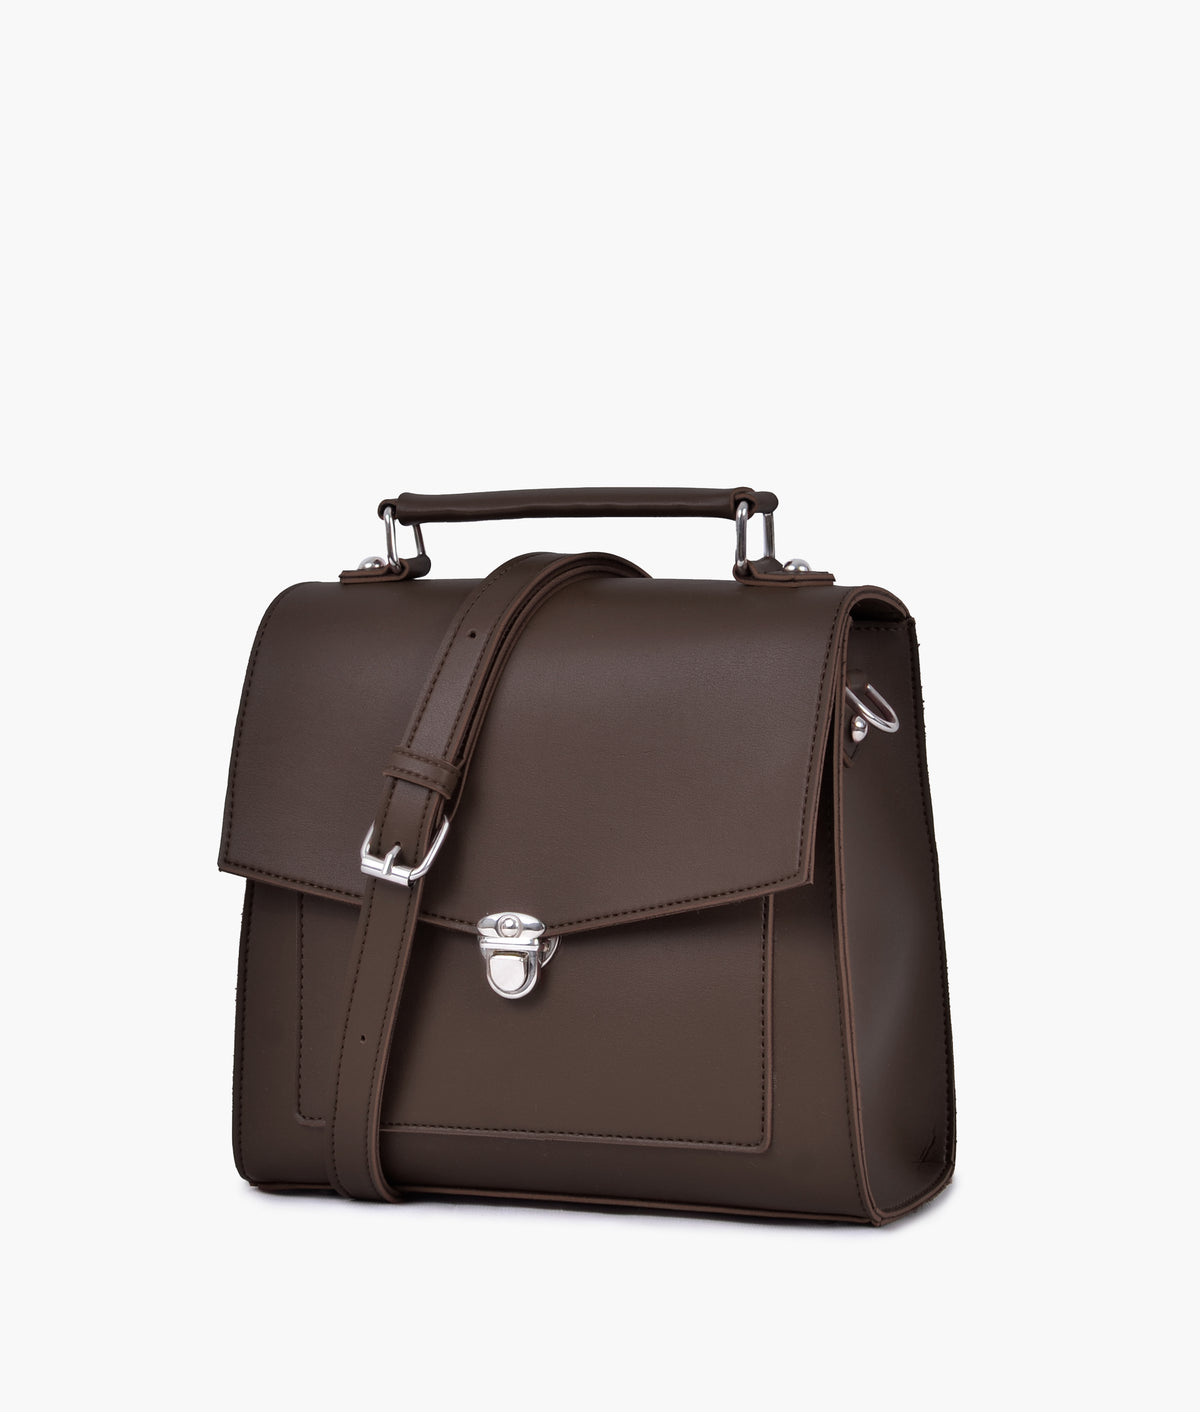 Dark brown push-lock messenger bag